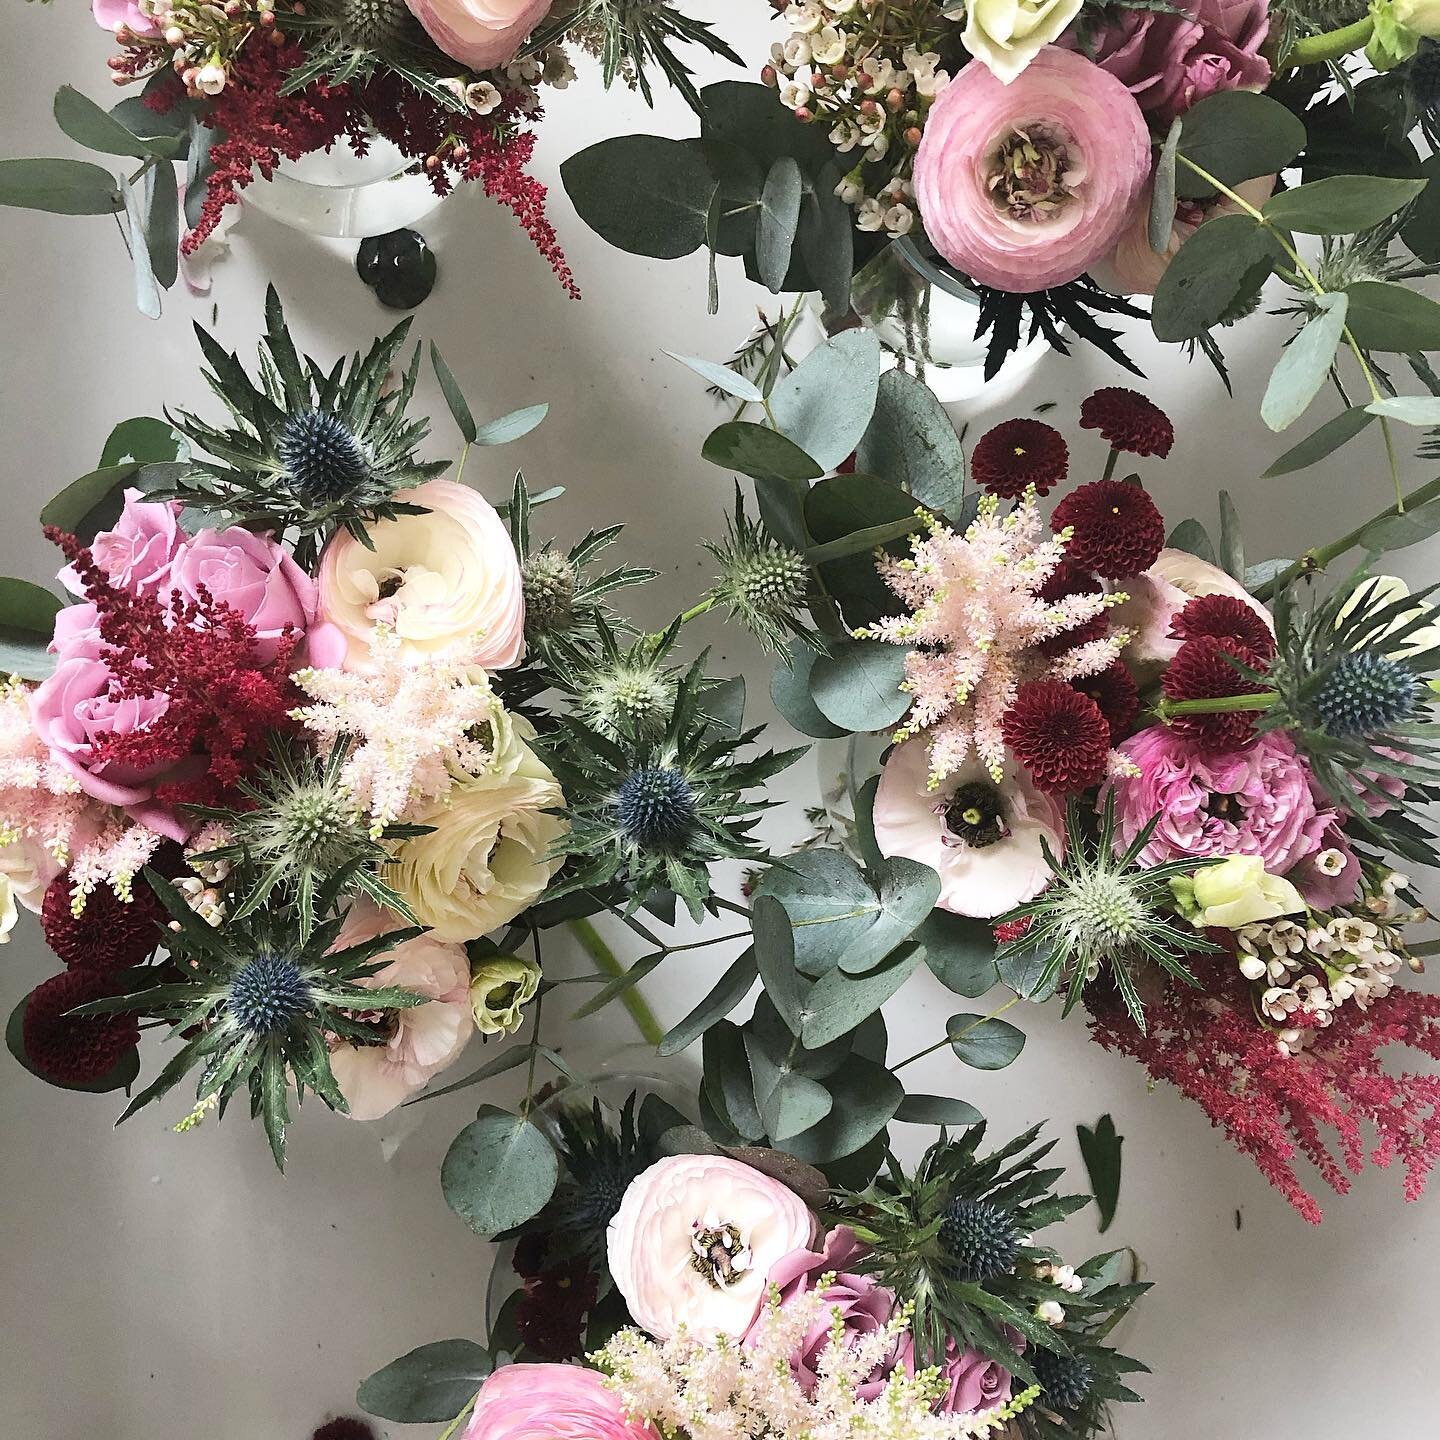 Bridesmaids bouquets from above 💕

#bridesmaid
#bridesmaids
#cotonhousefarm
#bridalflowers
#bridalparty
#lichfieldflorist
#warwickshireflorist
#birminghamflorist
#suttoncoldfieldflorist